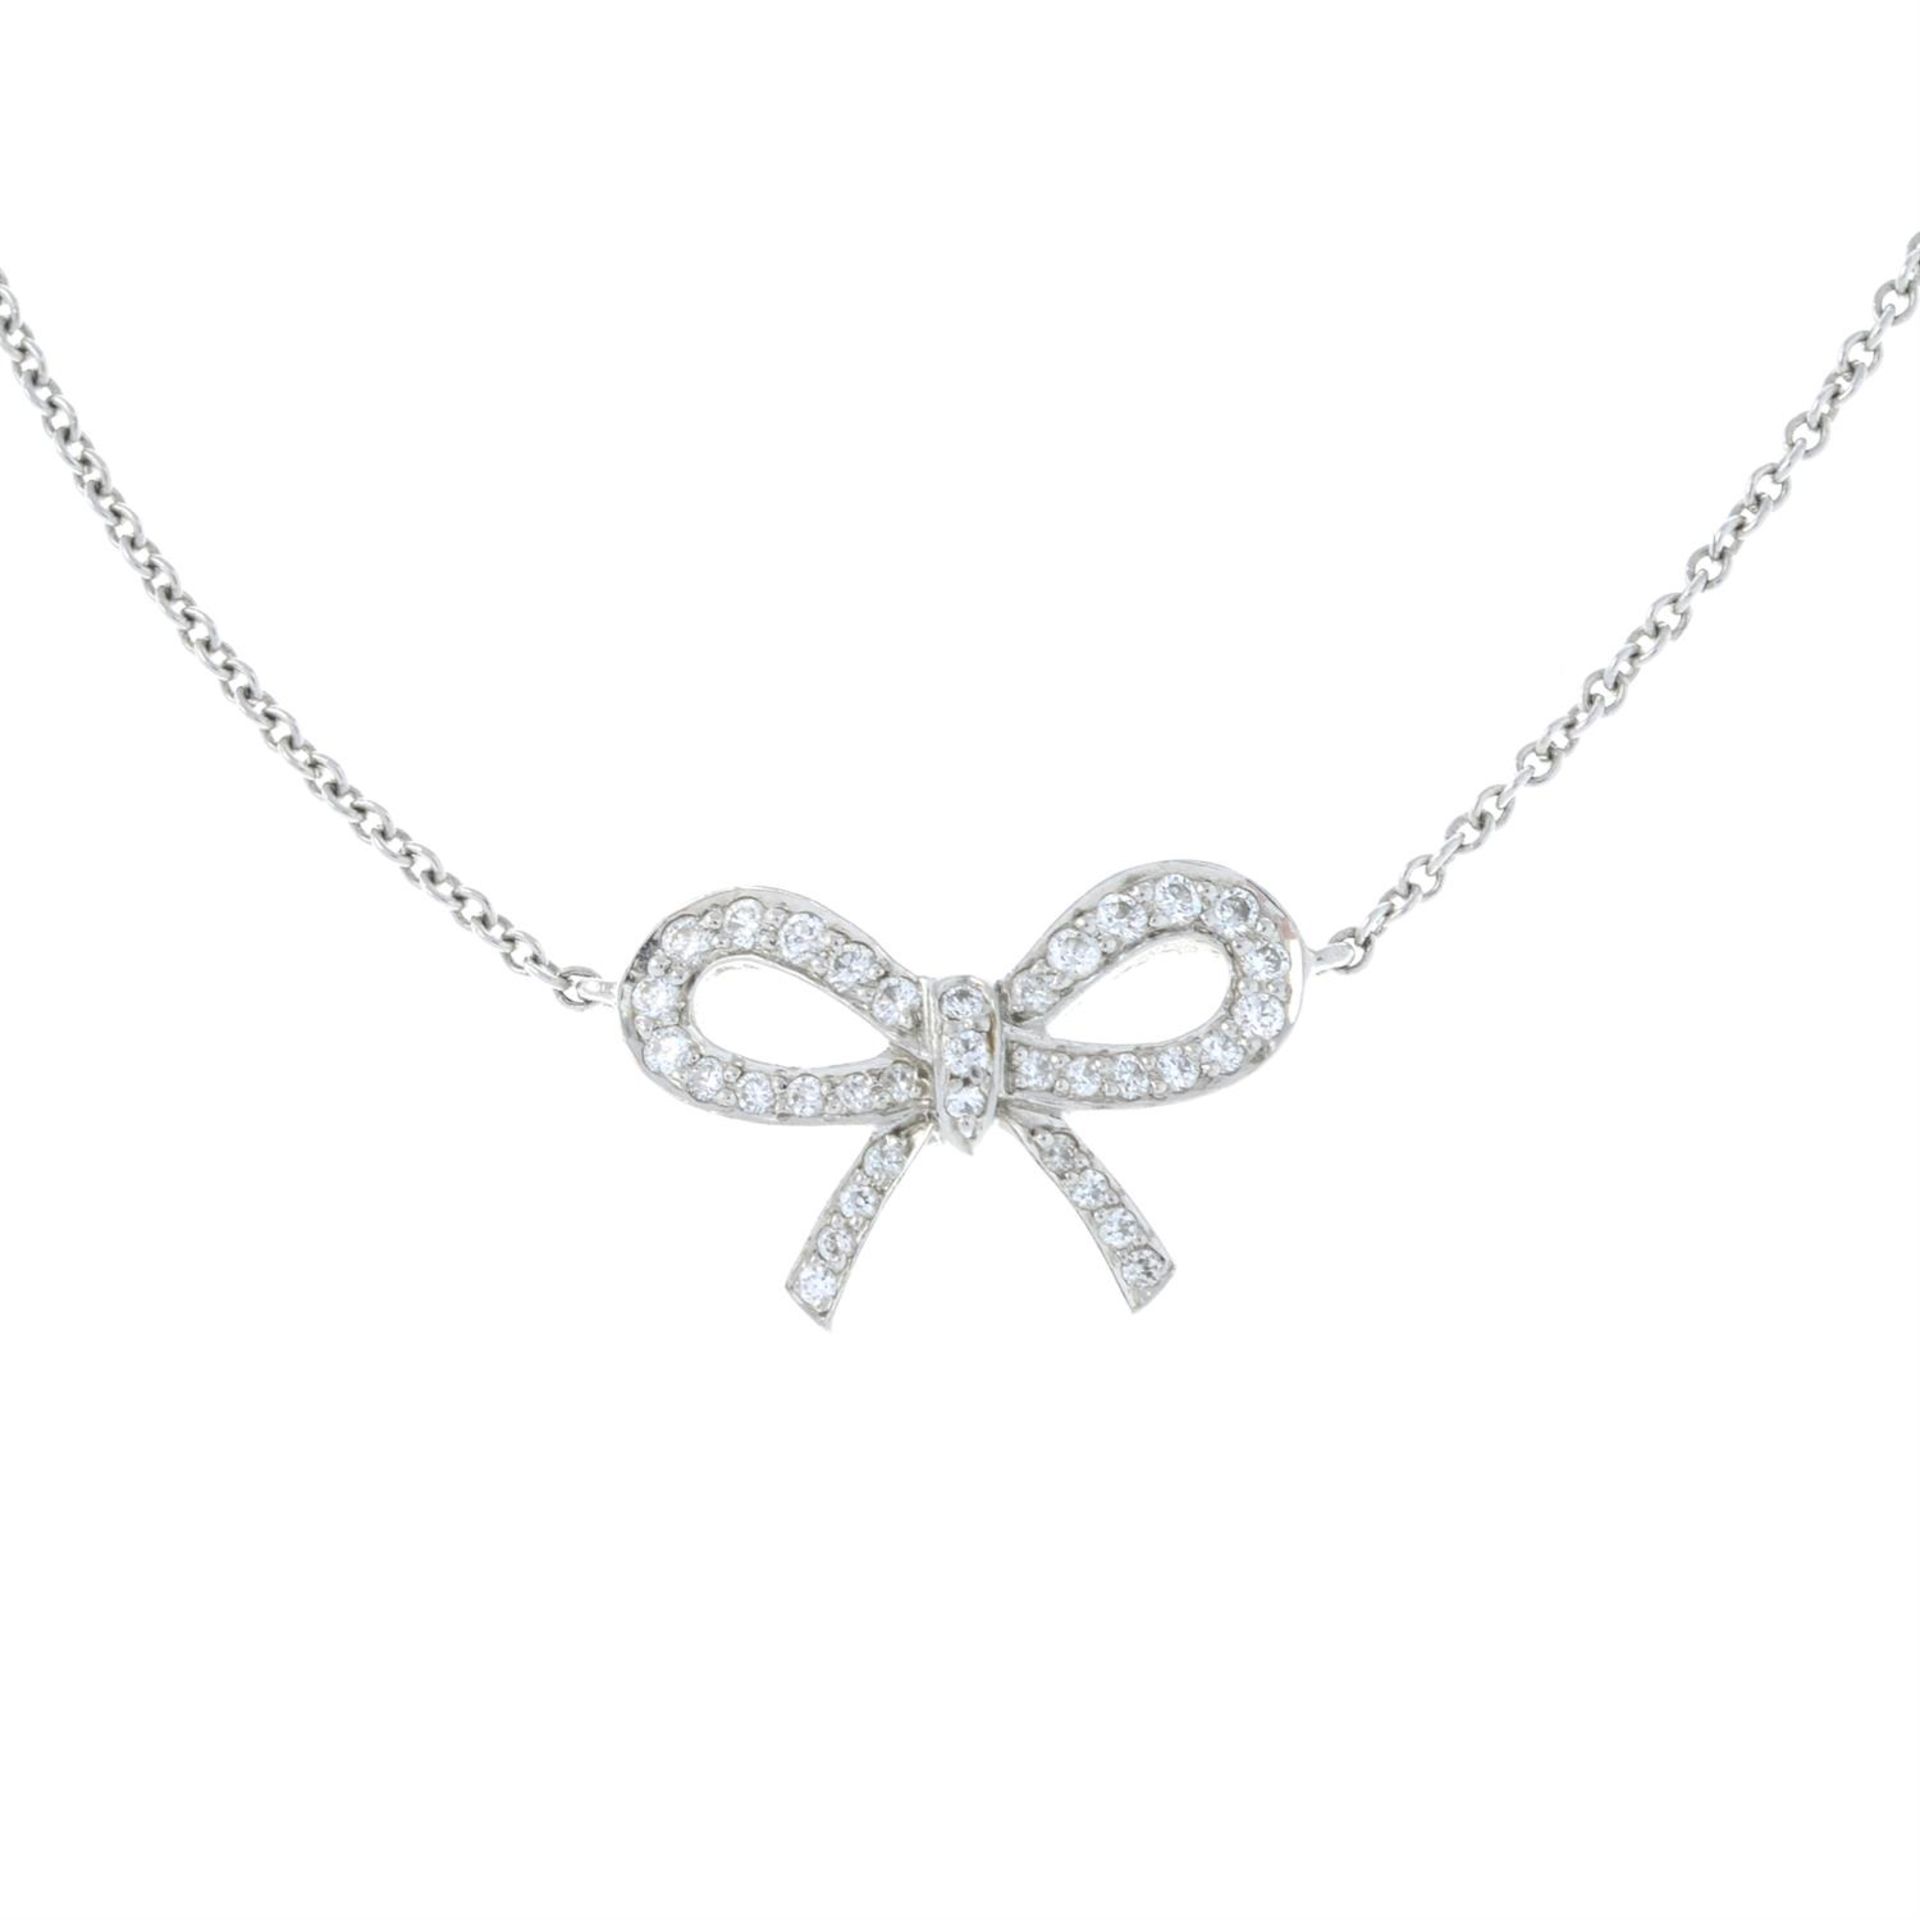 A brilliant-cut diamond bow bracelet, by Tiffany & Co.